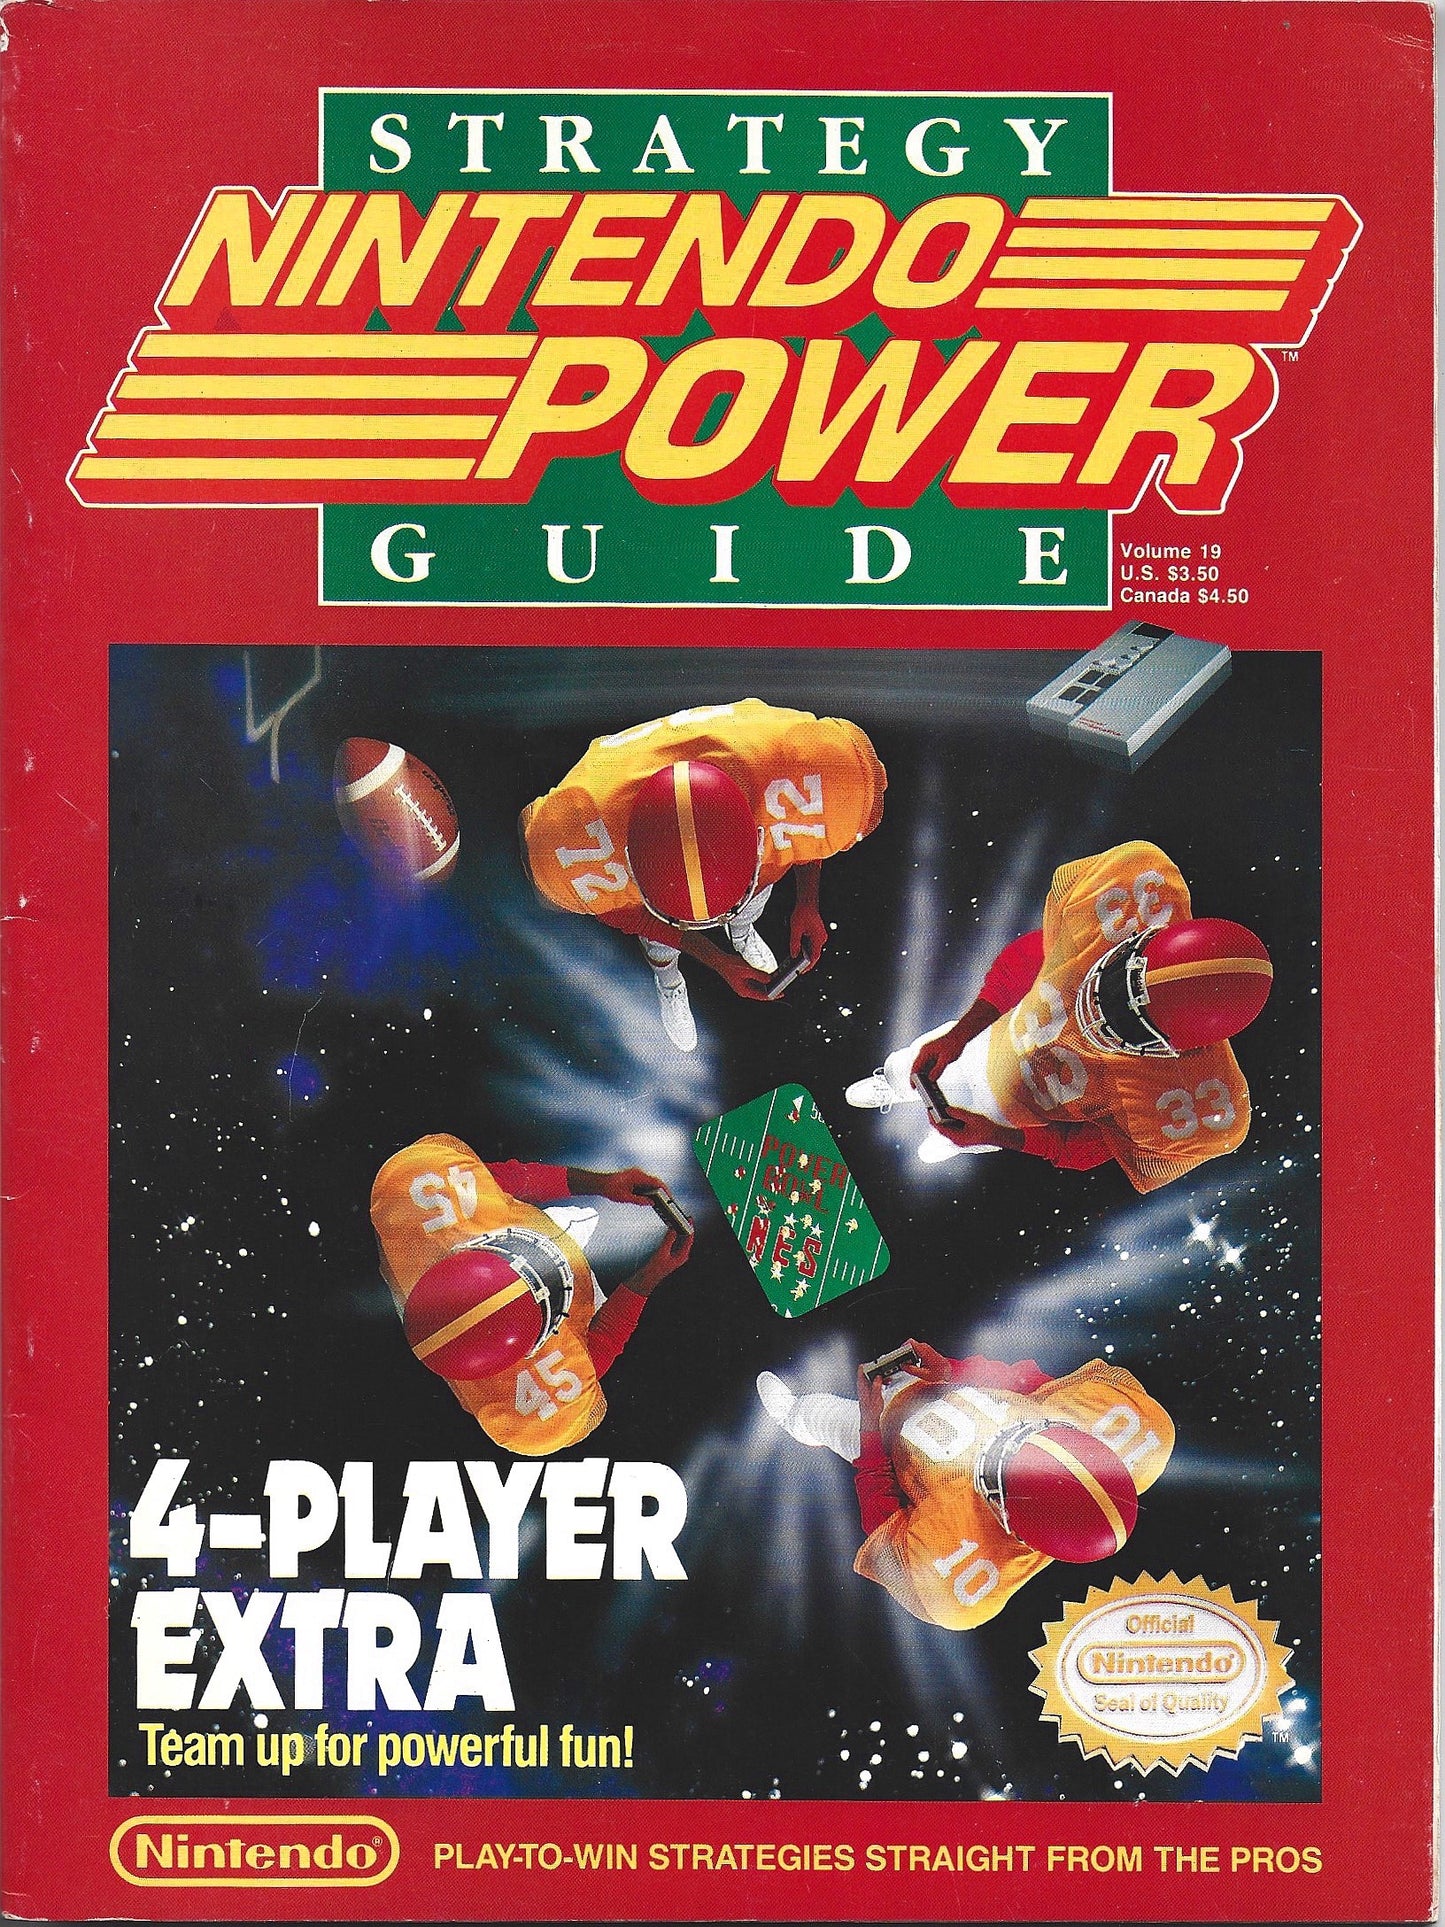 Nintendo Power Volume 19 (December 1990)